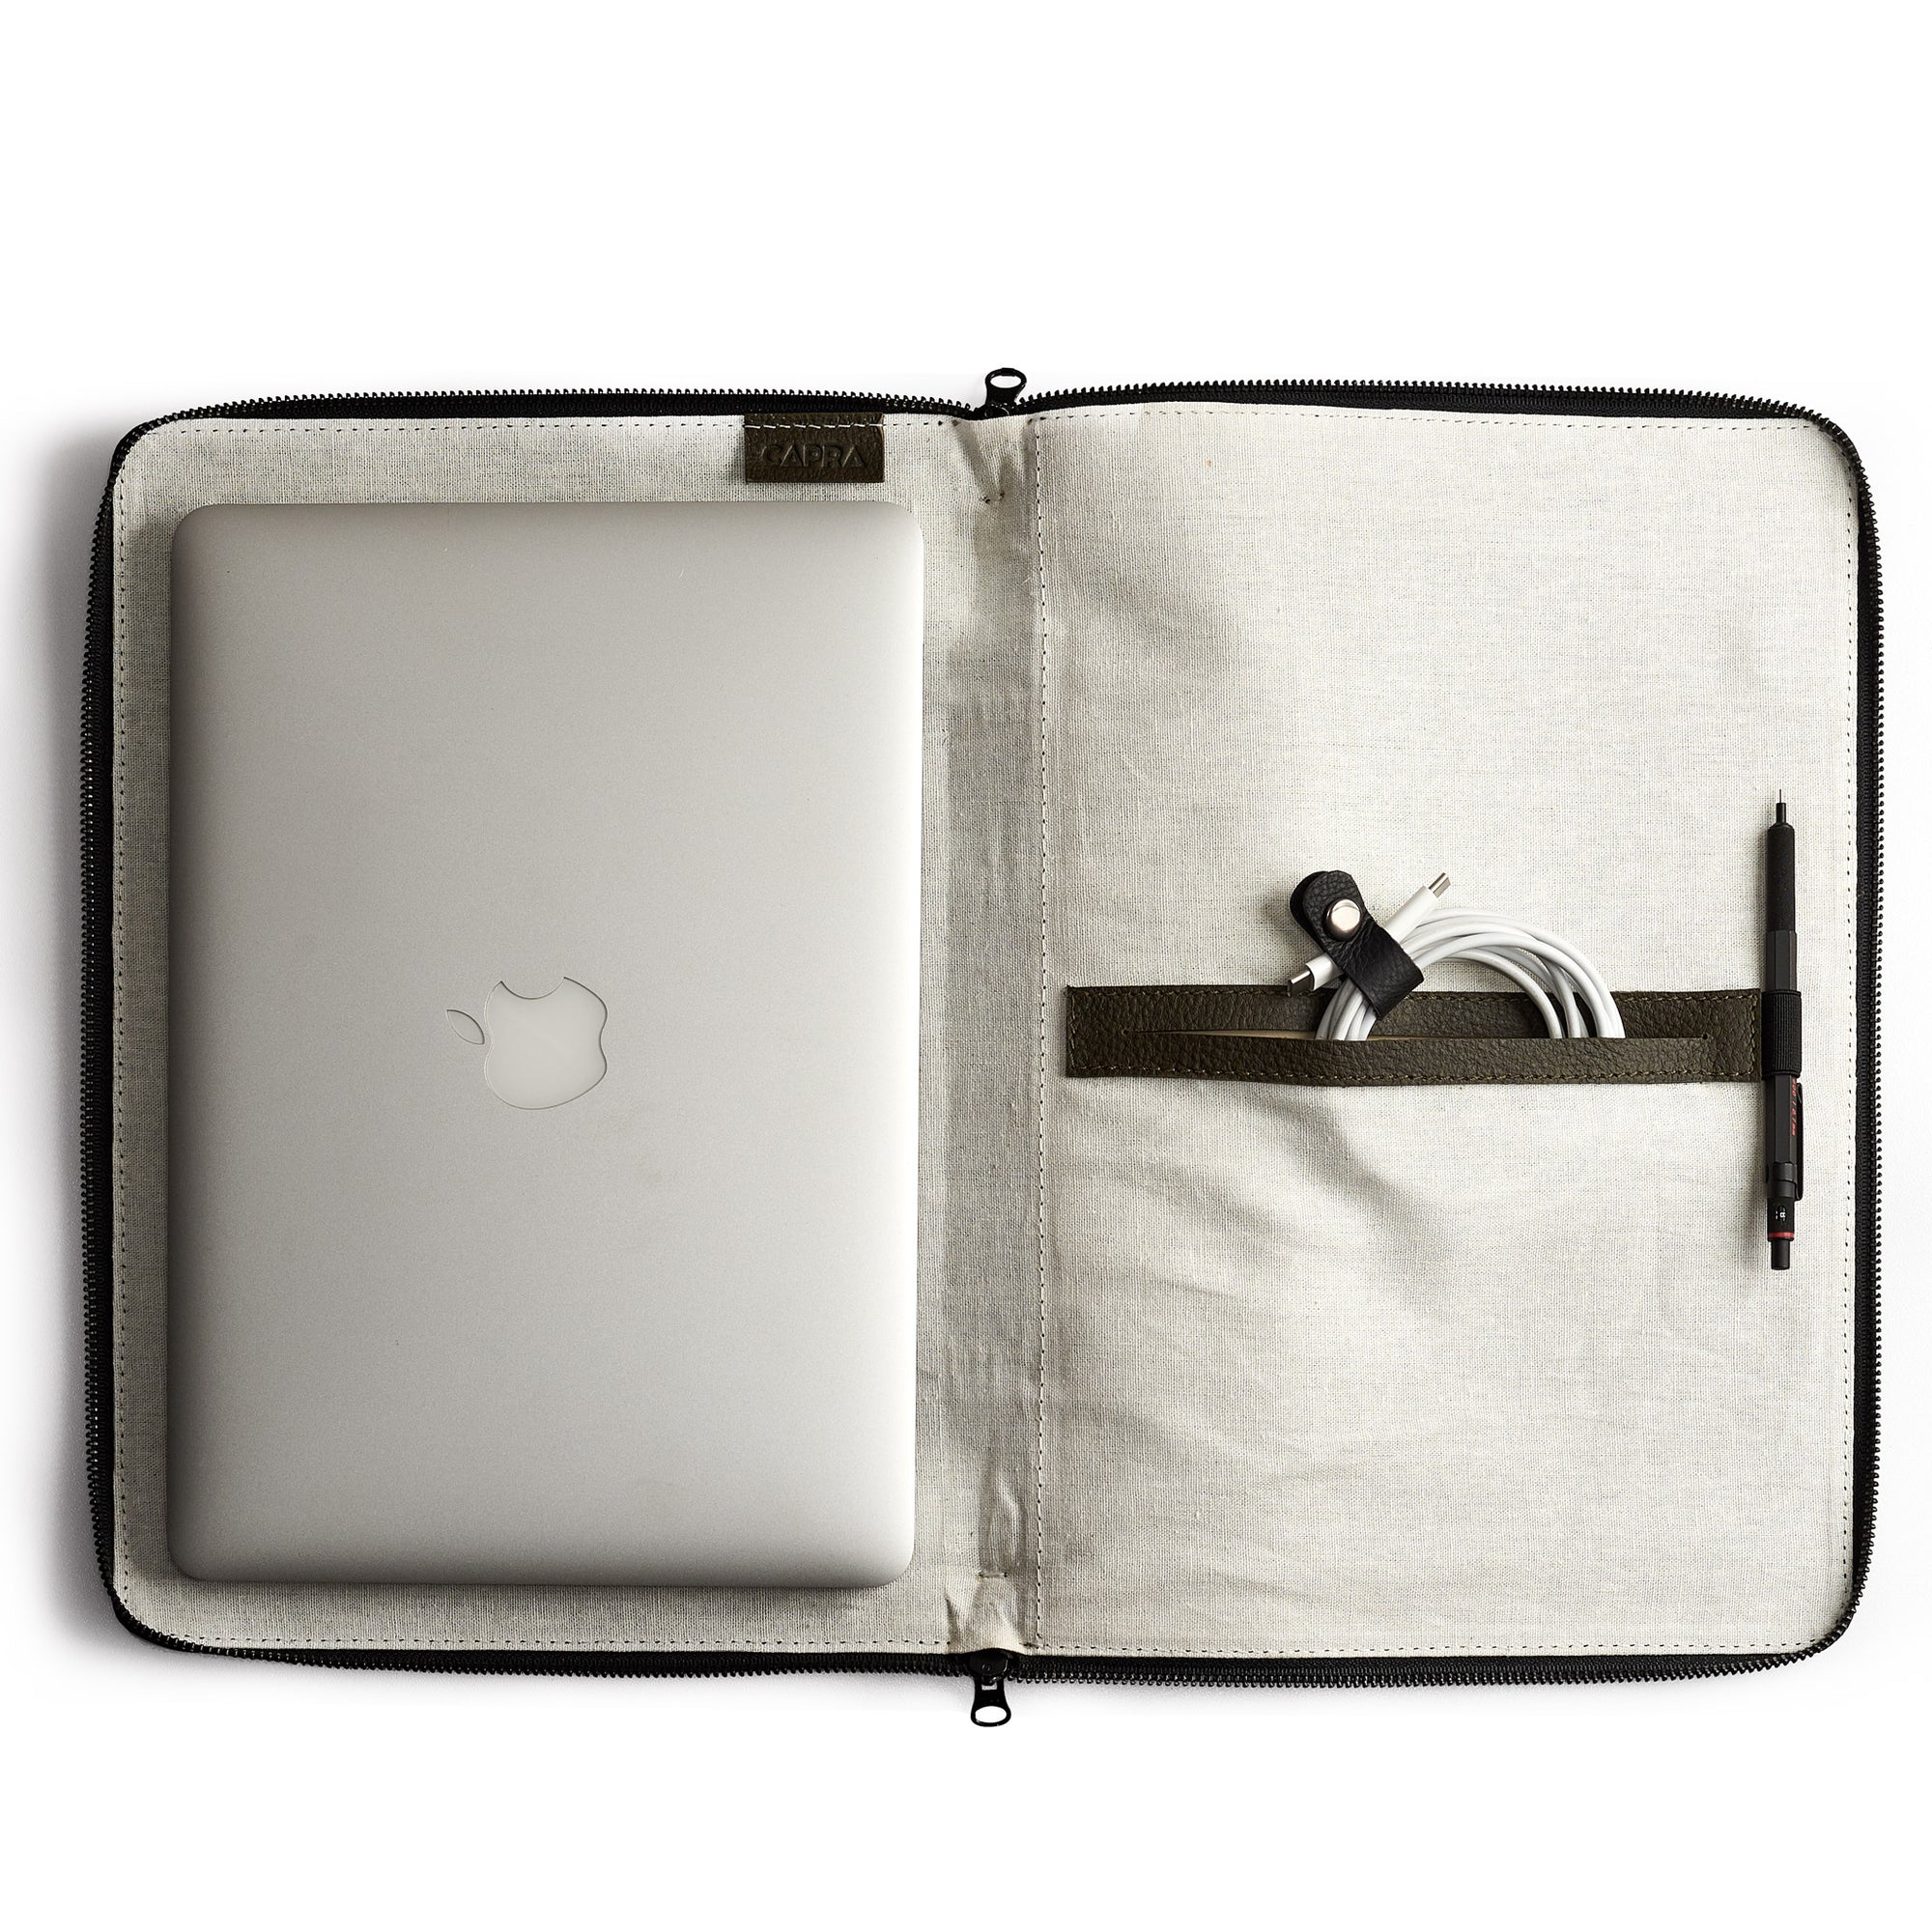 Linen interior. Green Leather Laptop Portfolio Case. Laptops & devices accessories Bag.